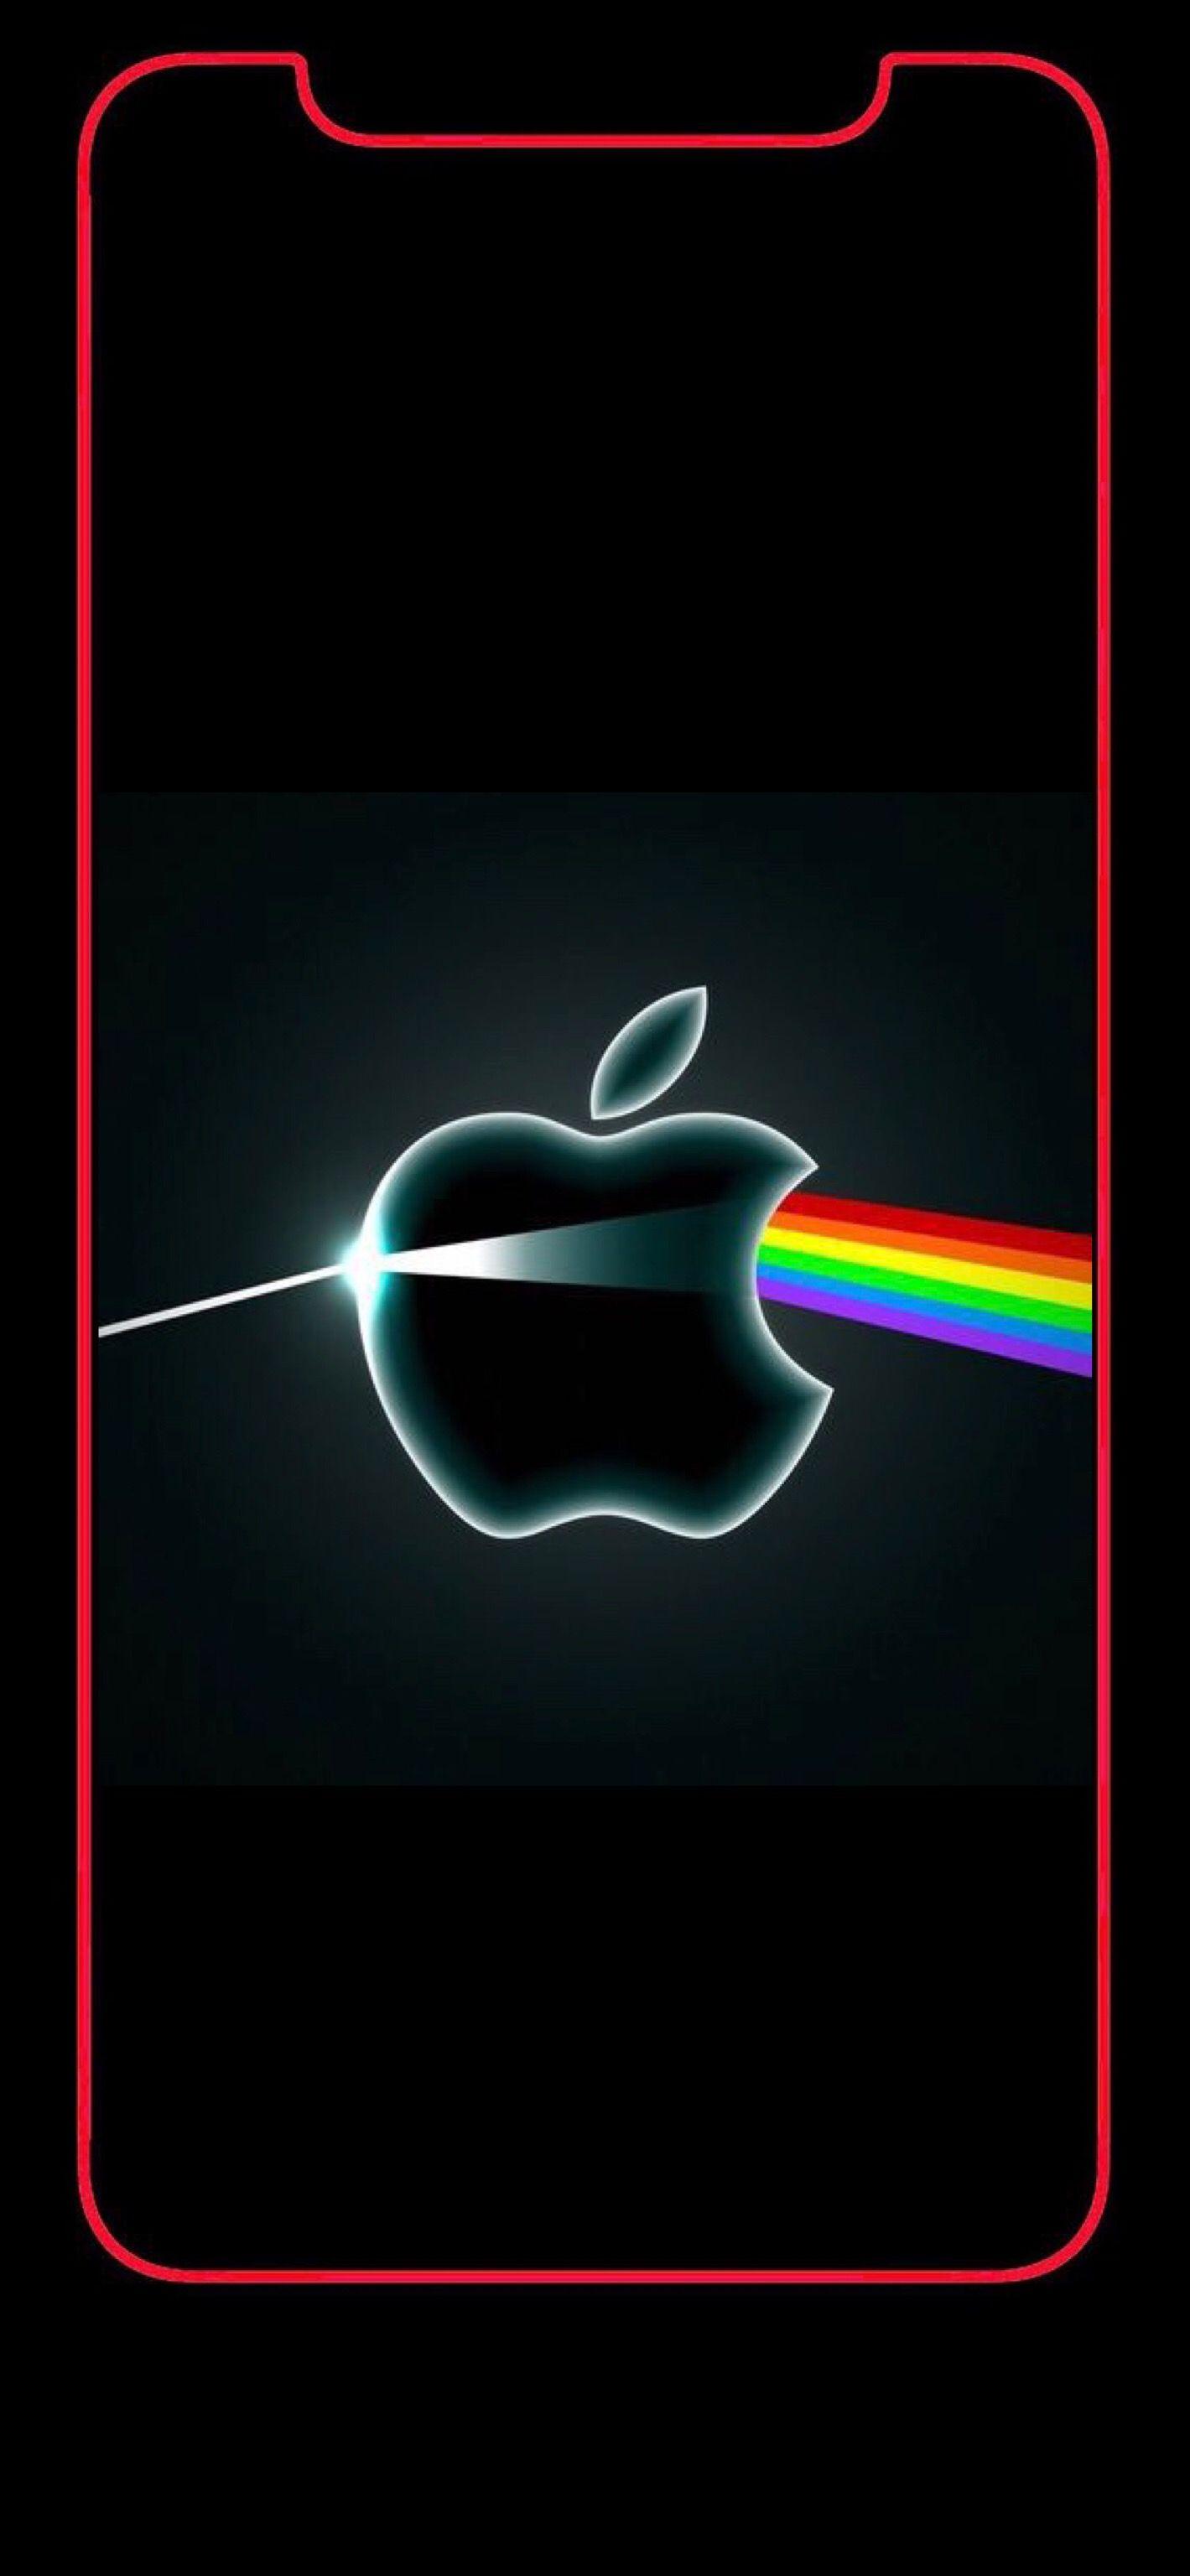 Wallpaper iPhone X logo rainbow 3. Apple iphone wallpaper